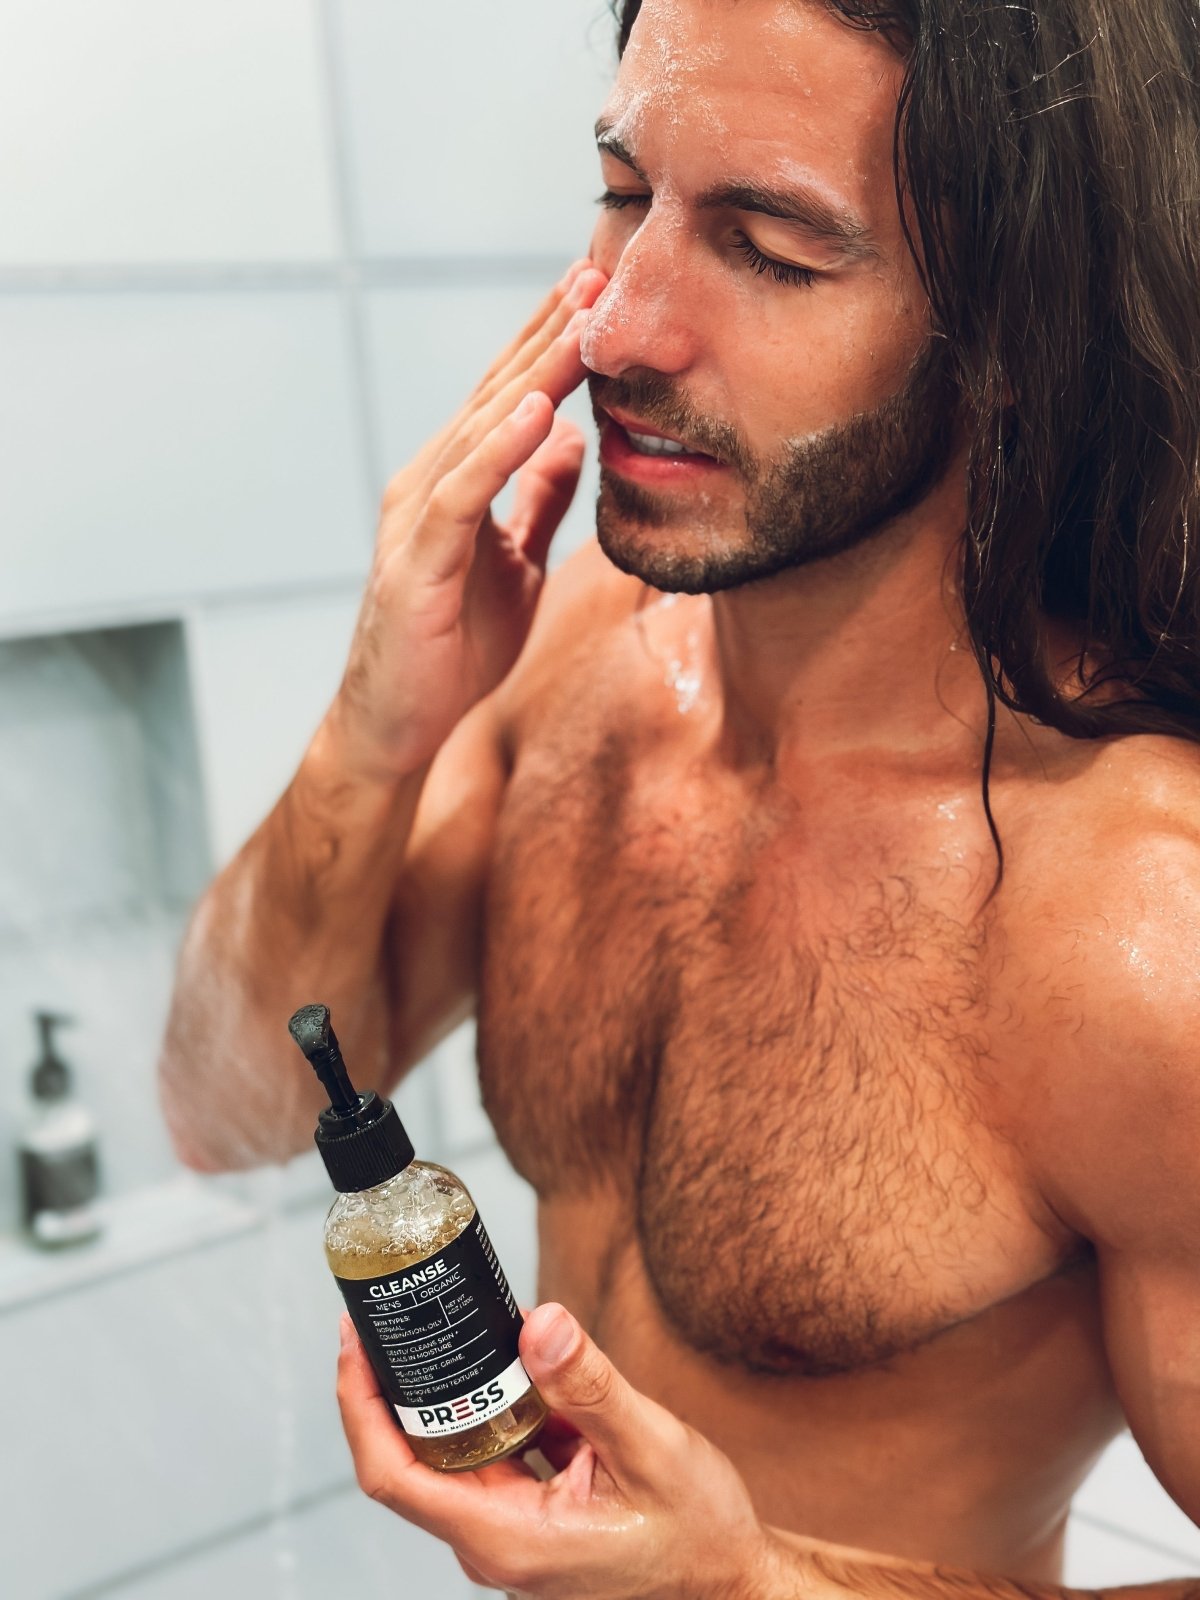 MEN'S FACIAL CLEANSER - Press Skin Care